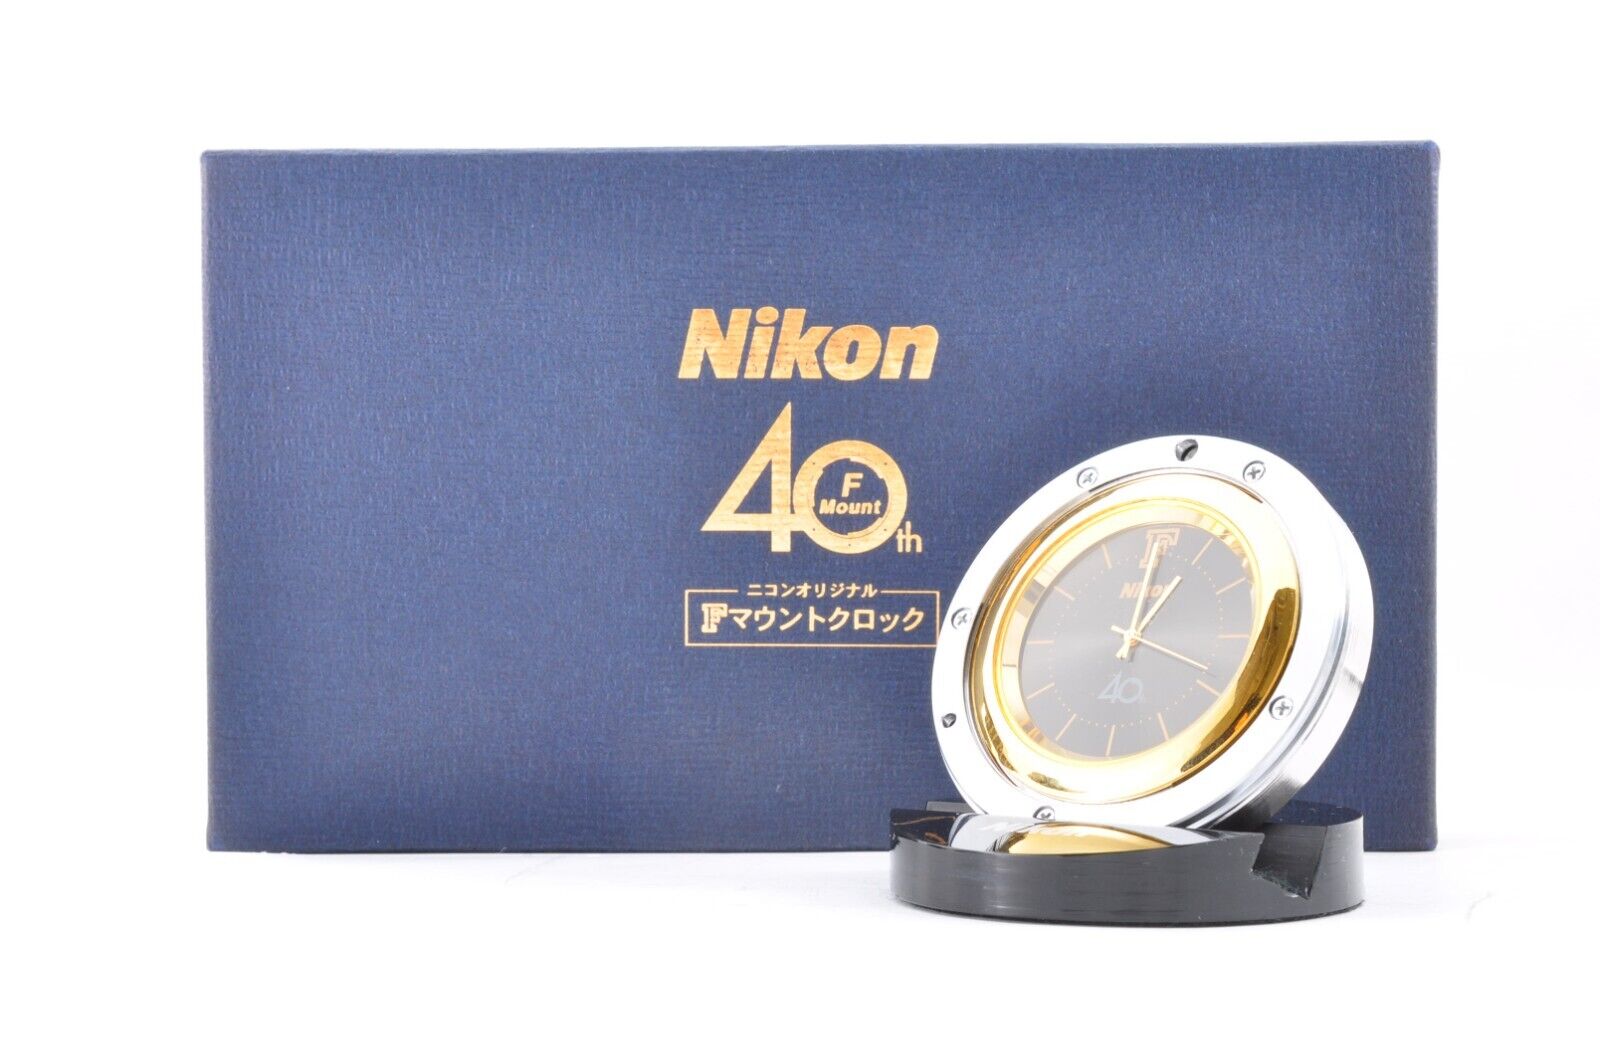 Nikon F Mount 40th Anniversary Original Desk Clock from Japan  (Rare )